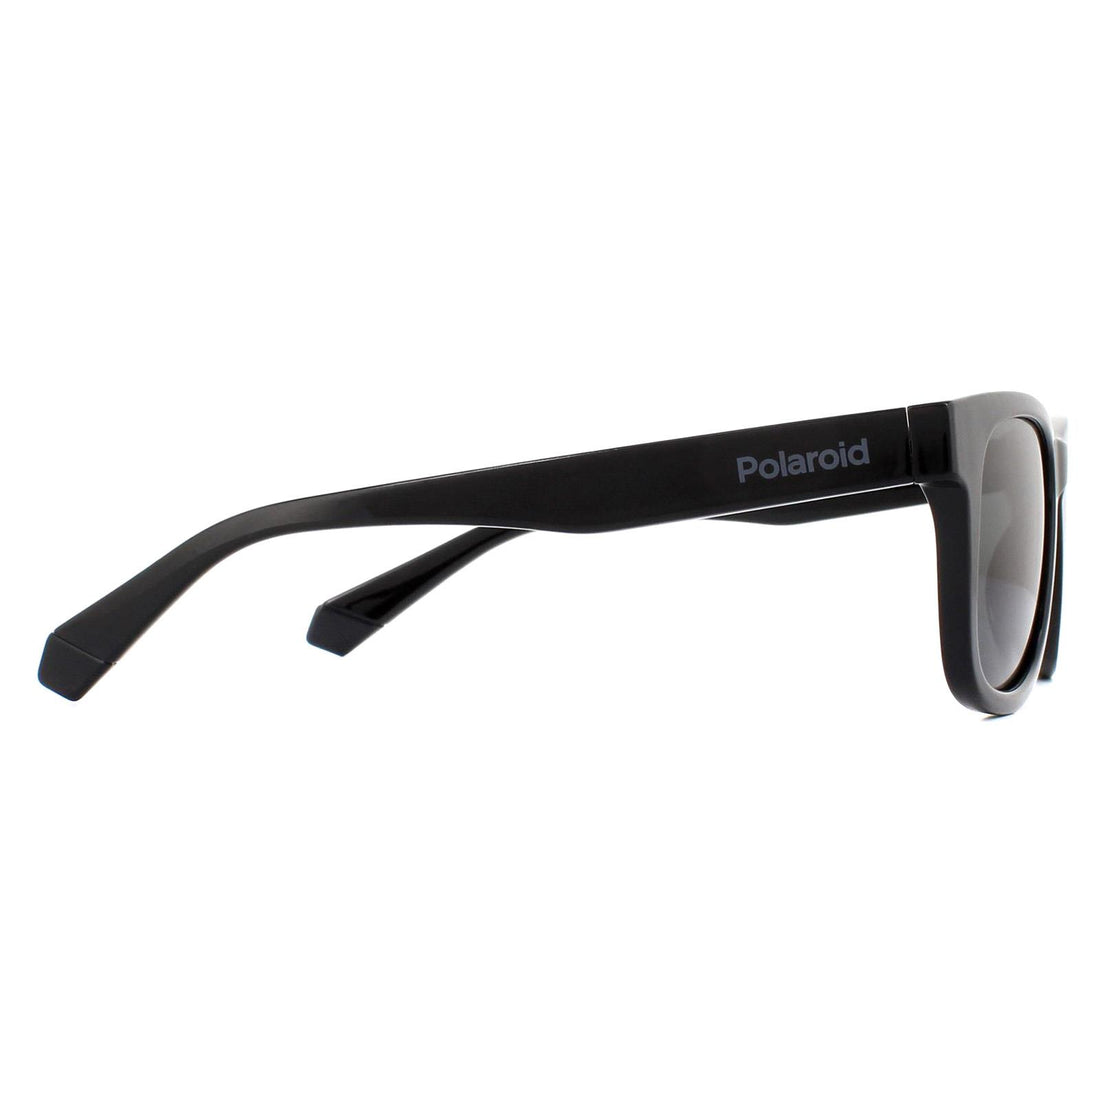 Polaroid Kids Sunglasses 8009/N/NEW 807 M9 Black Grey Polarized